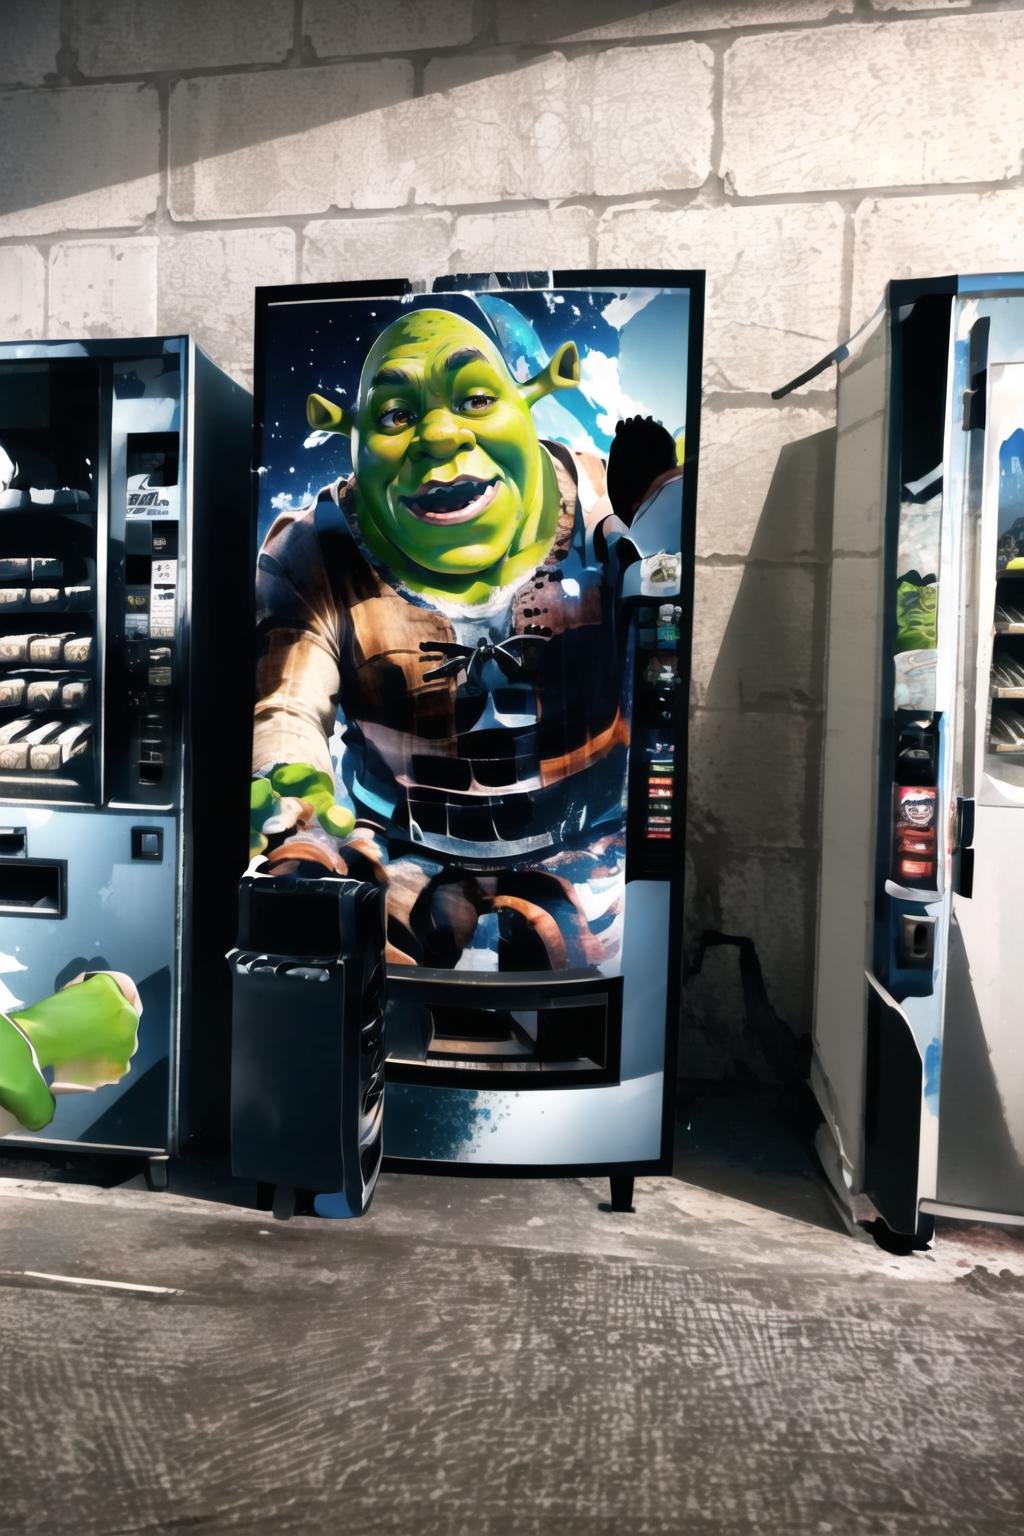 Highly detailed, High Quality, Masterpiece, beautiful, VendingMaschine, vending machine, <lora:VendingMaschine:1>, shrex, green skin, ogre, shrek, <lora:Char_Sigmas_Shrek:0.9>